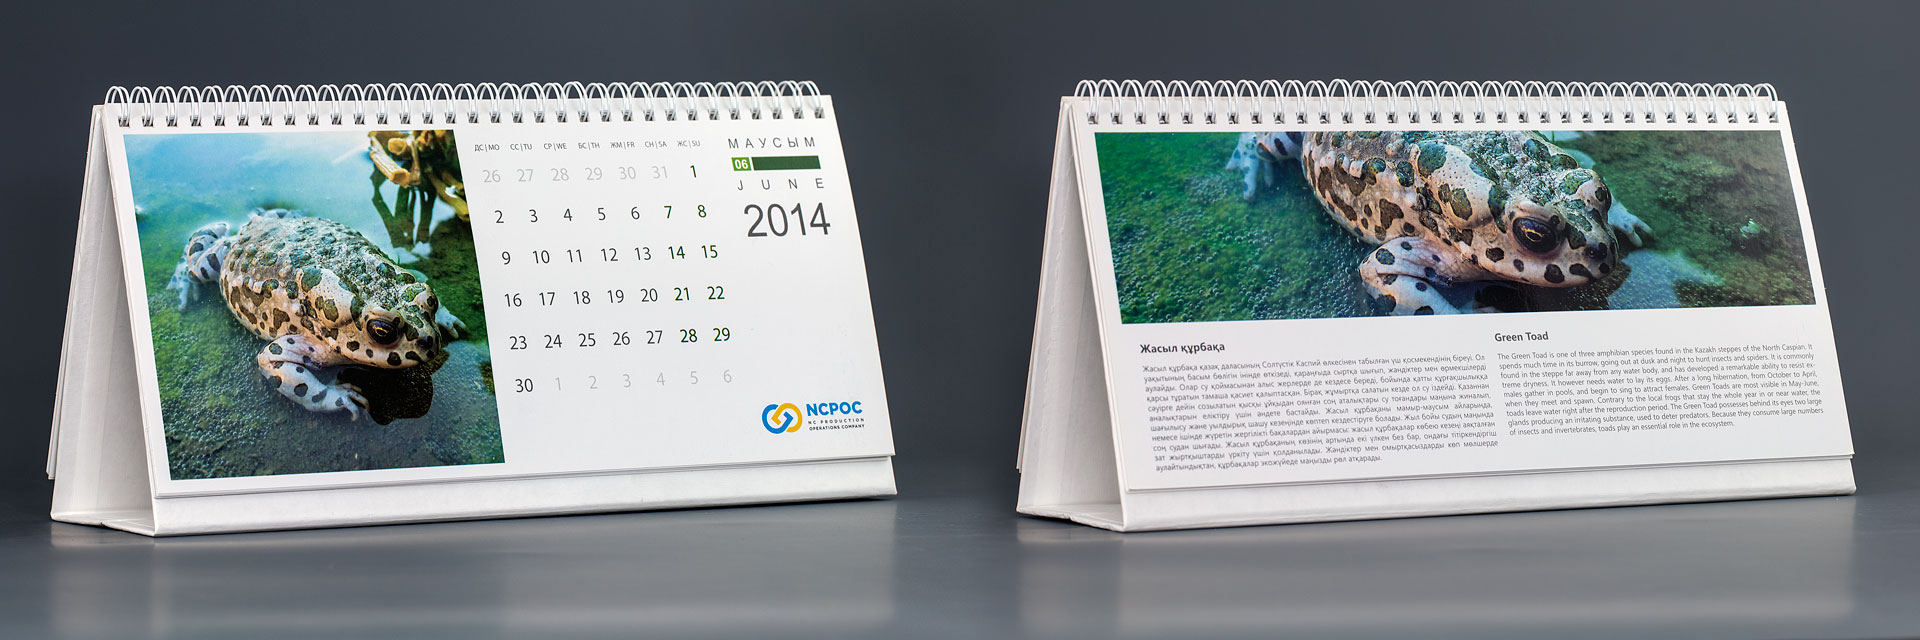 NCPOC - calendar 2014